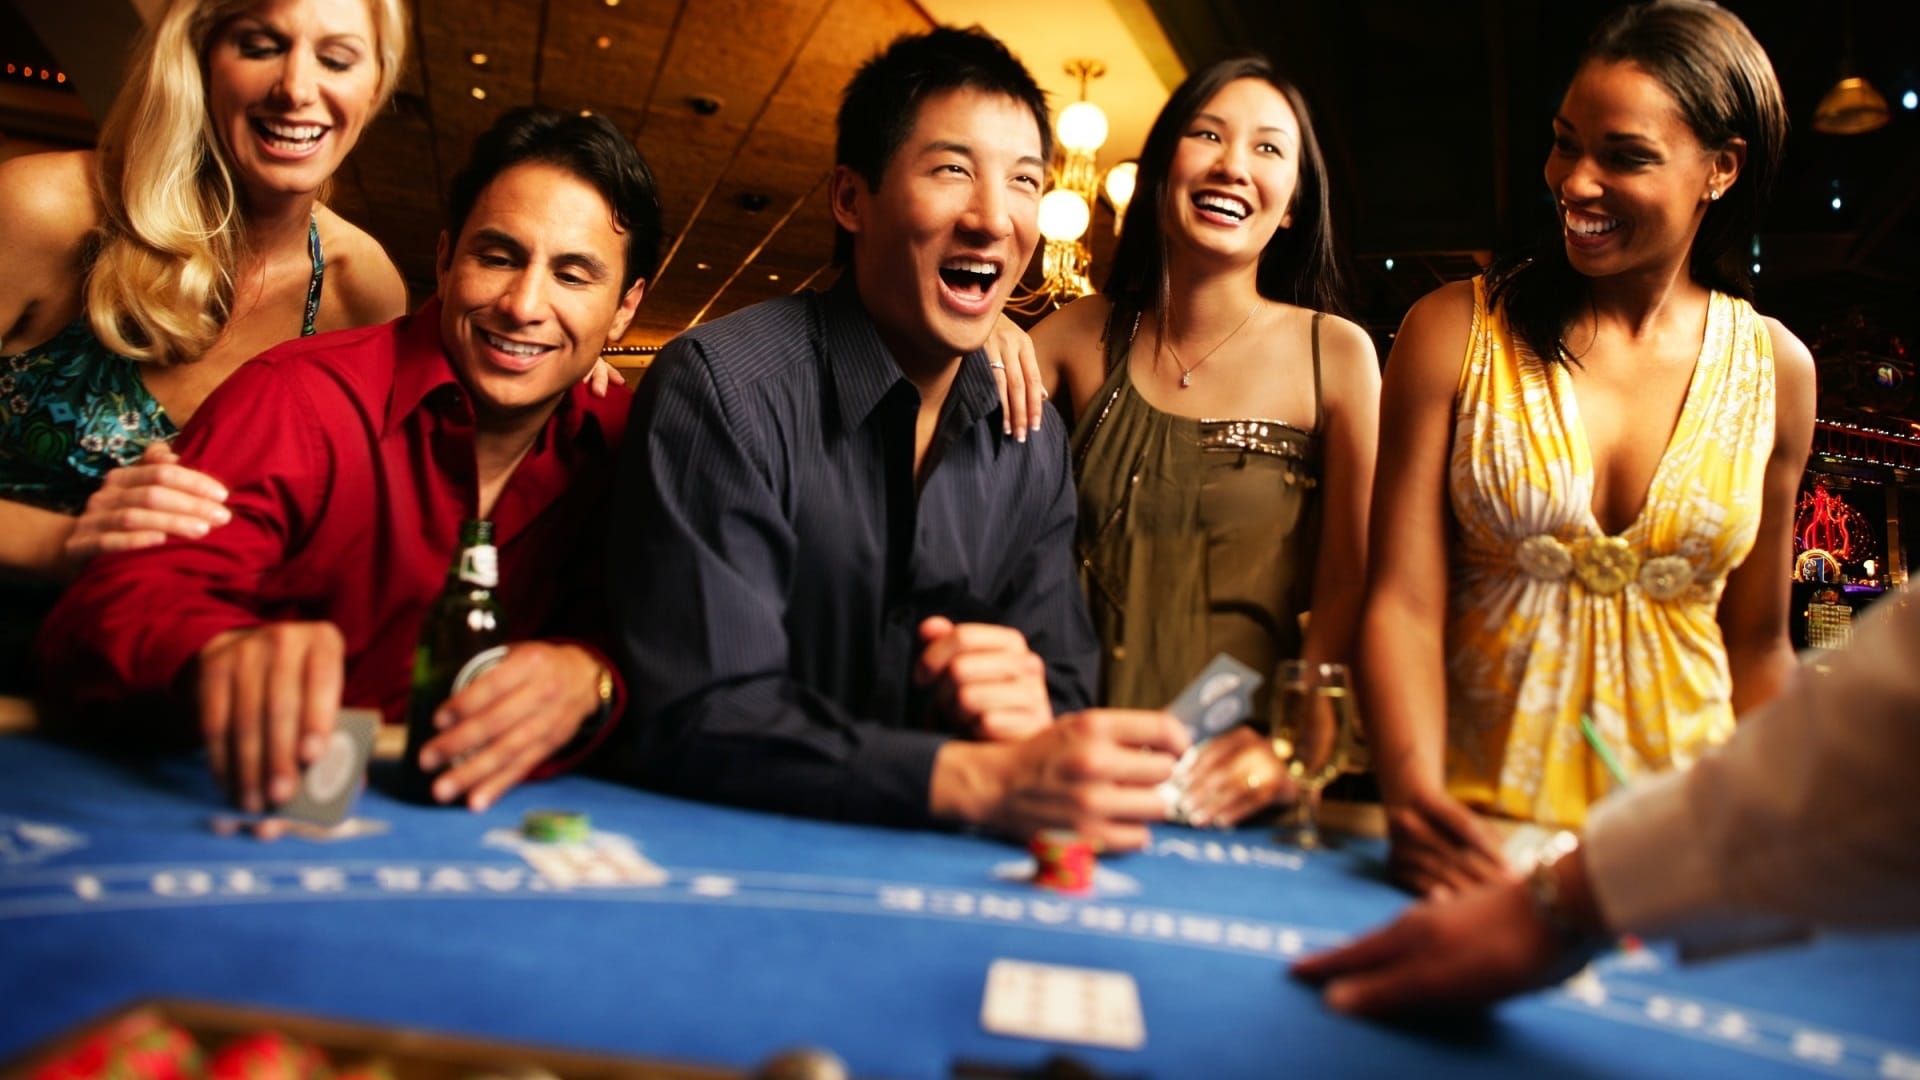 Basics of Online Casino Gaming for Beginners